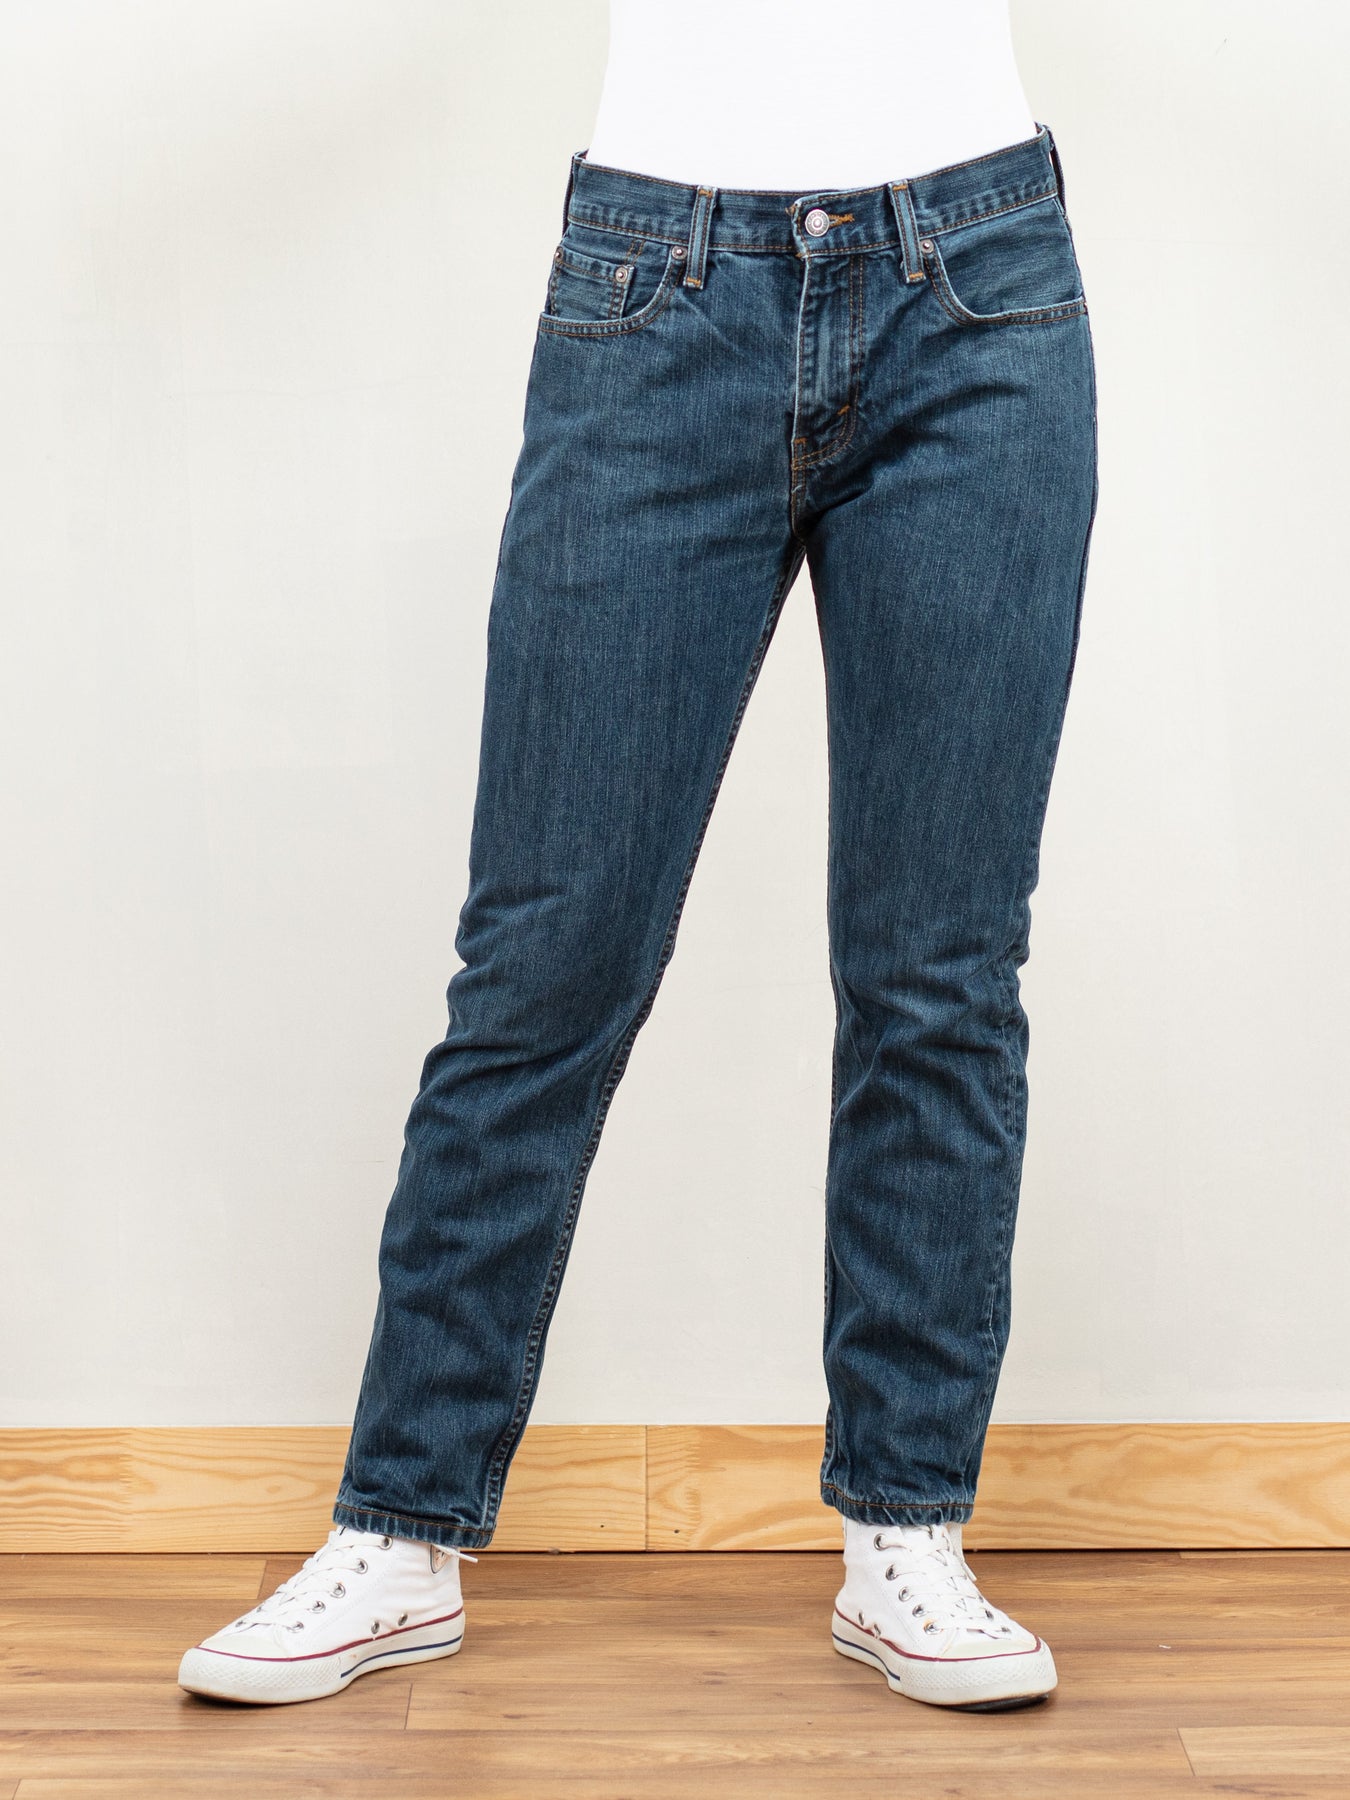 Jeans For Women - Shop All Levi's® Women's Jeans